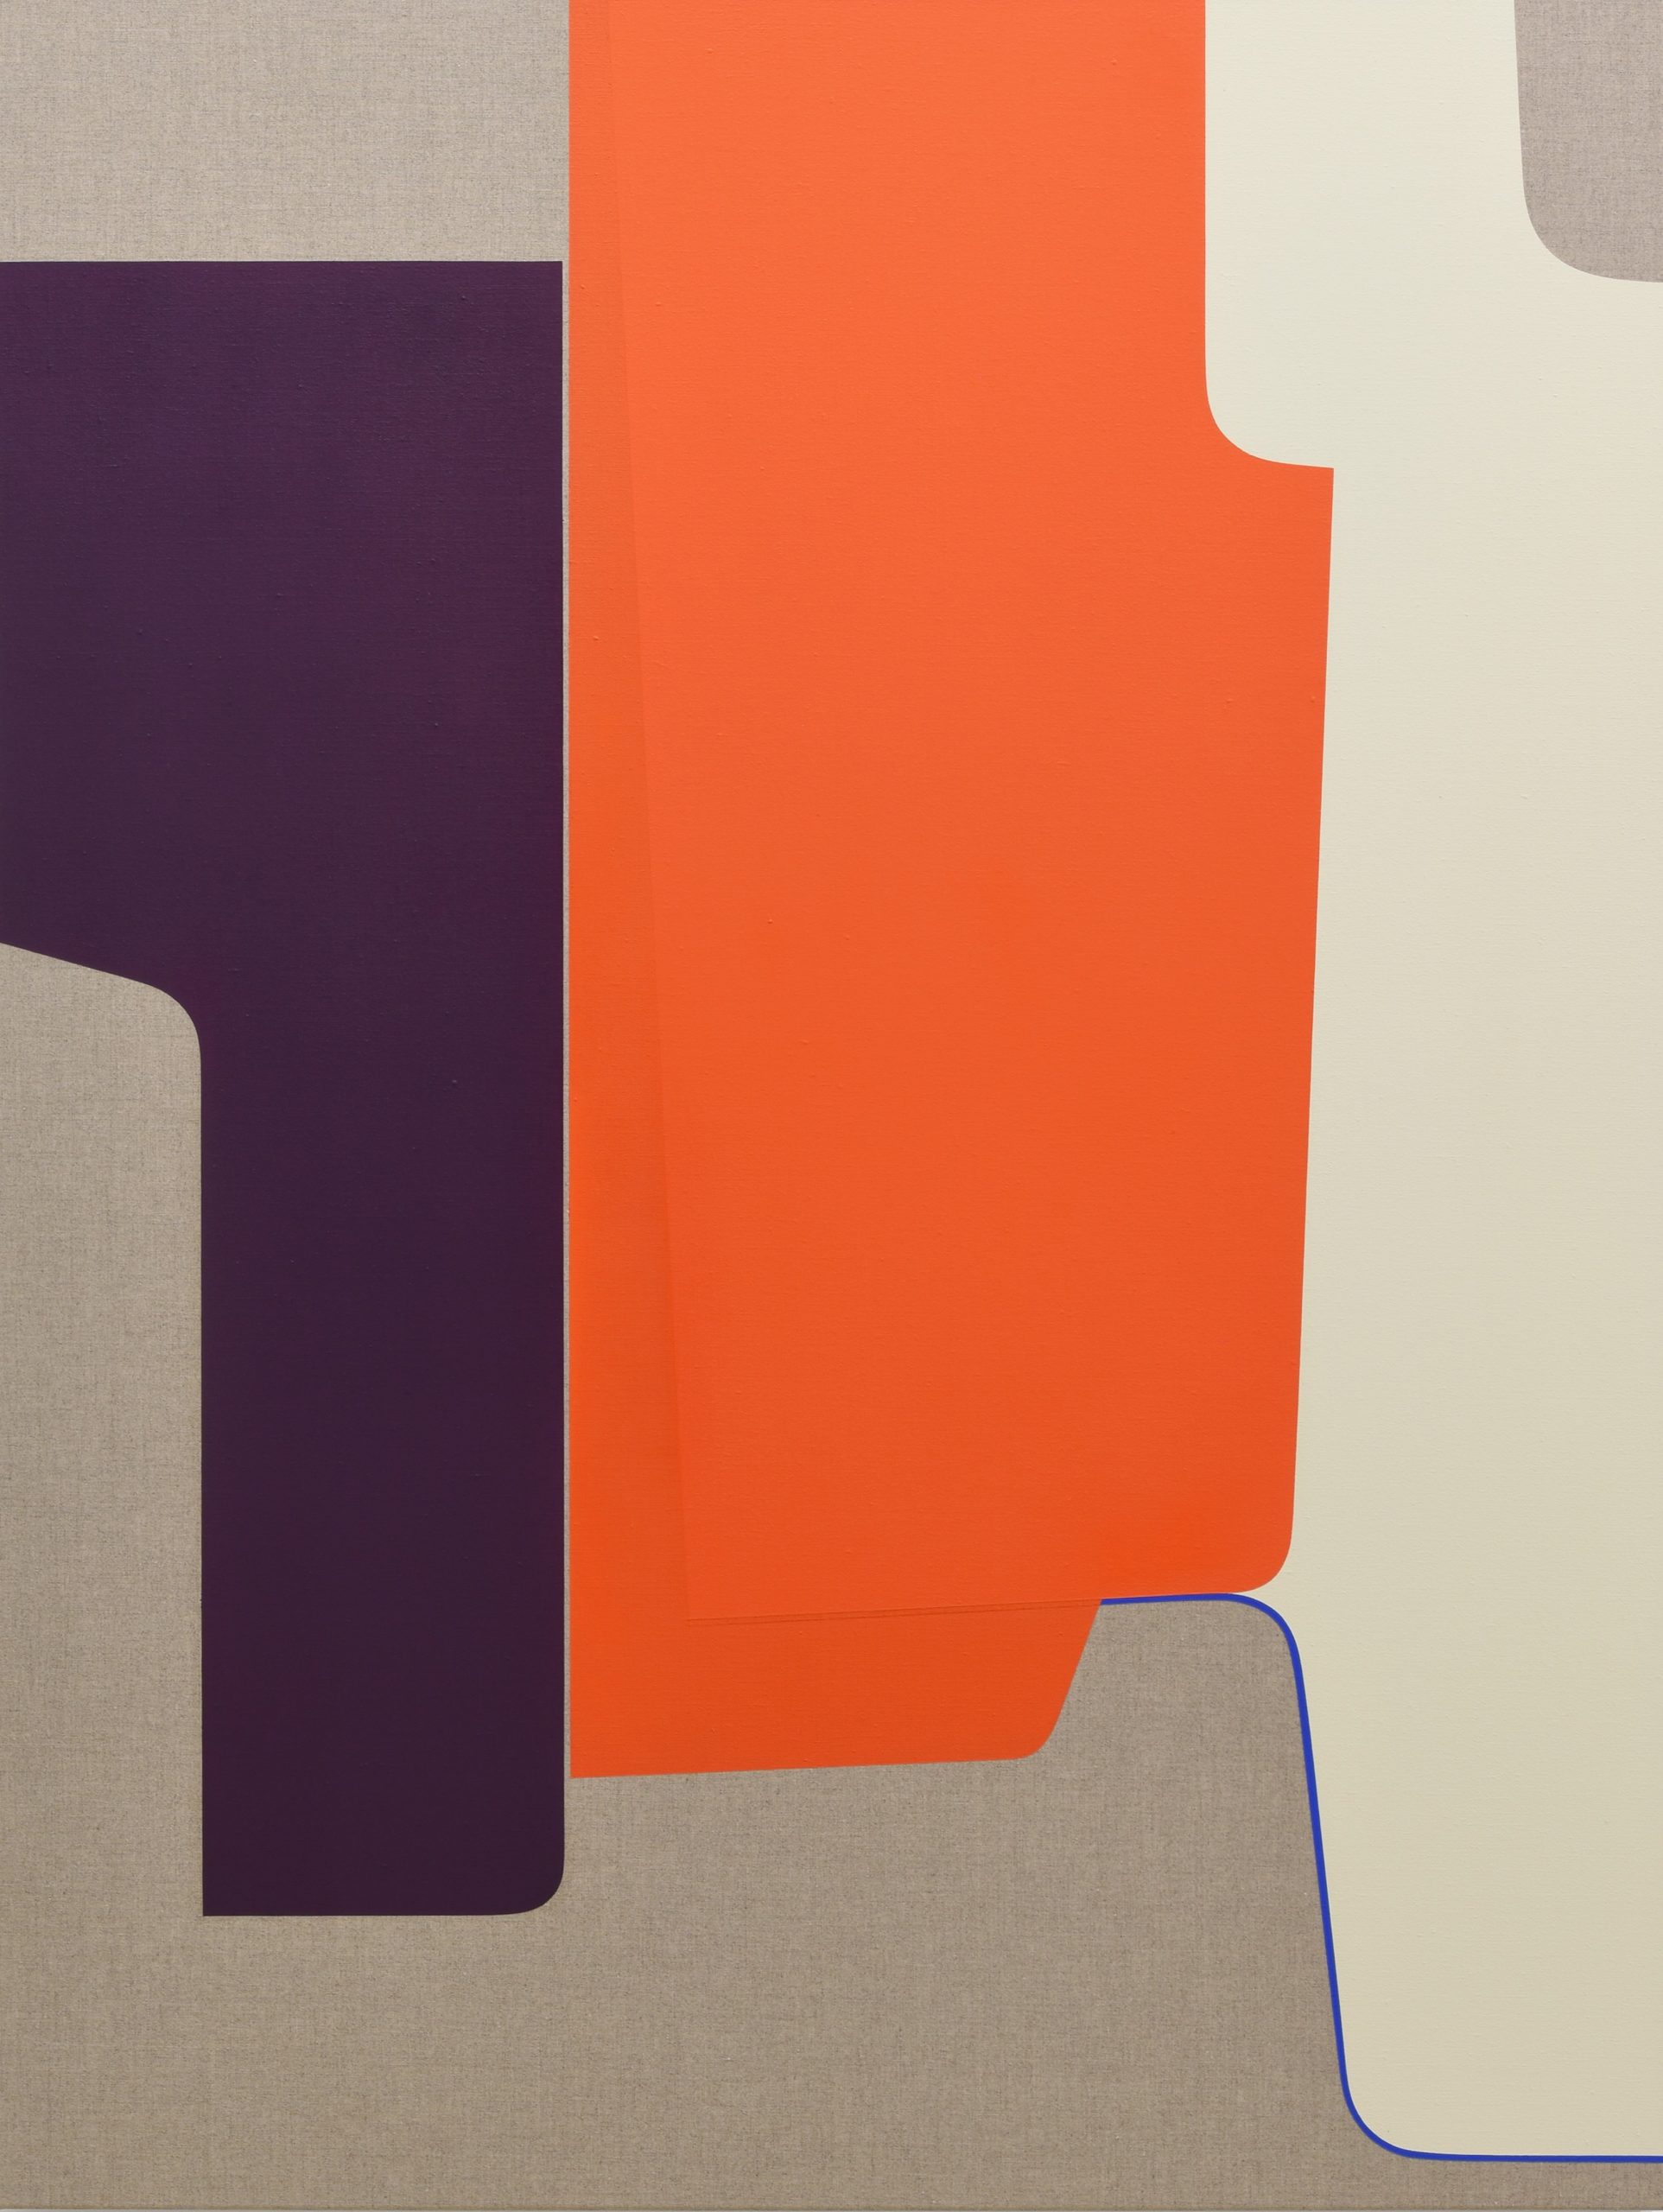 Matthew Browne 'Filosieth' vinyl tempera and oil on linen 107 x 81cm $10,500